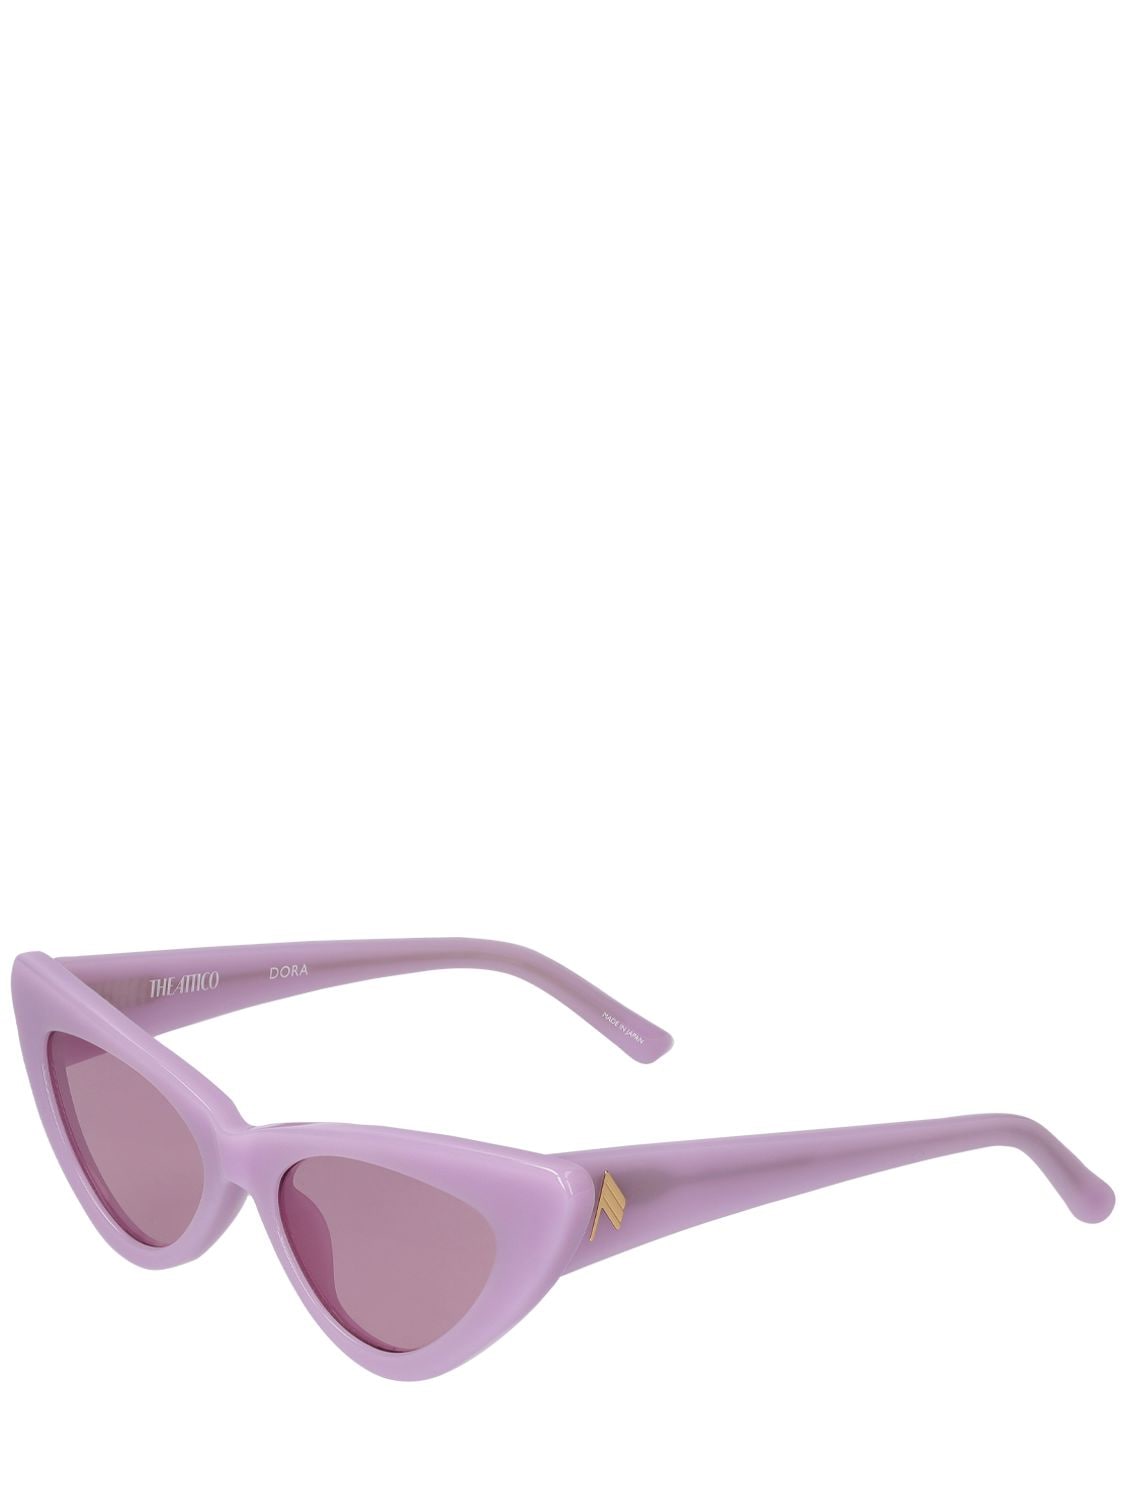 Attico Purple Linda Farrow Edition Dora Sunglasses | ModeSens